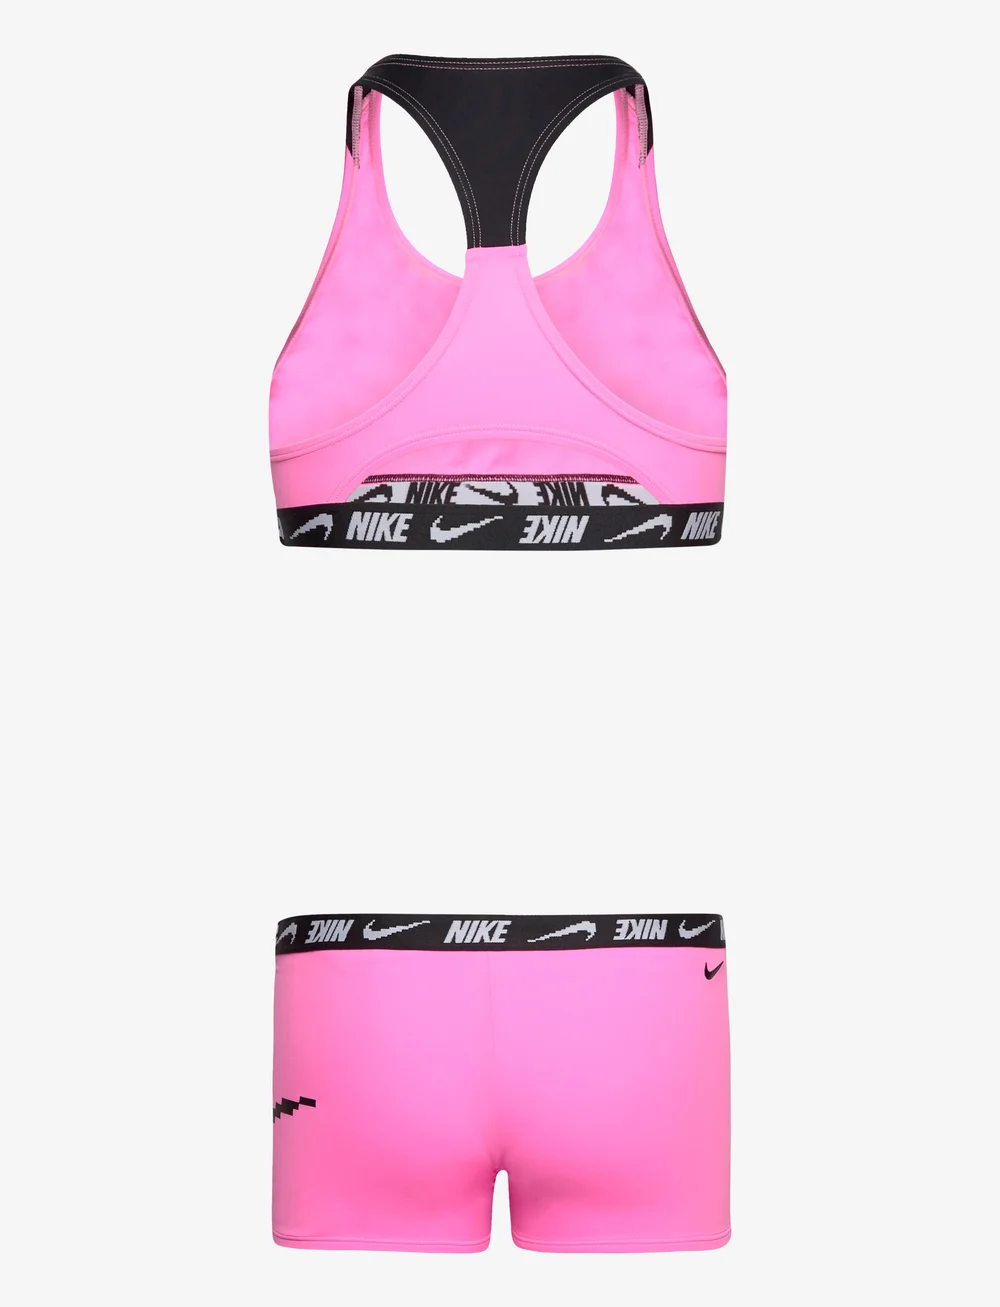 NIKE SWIM Nike G Racerback Bikini Set - Bikinis 